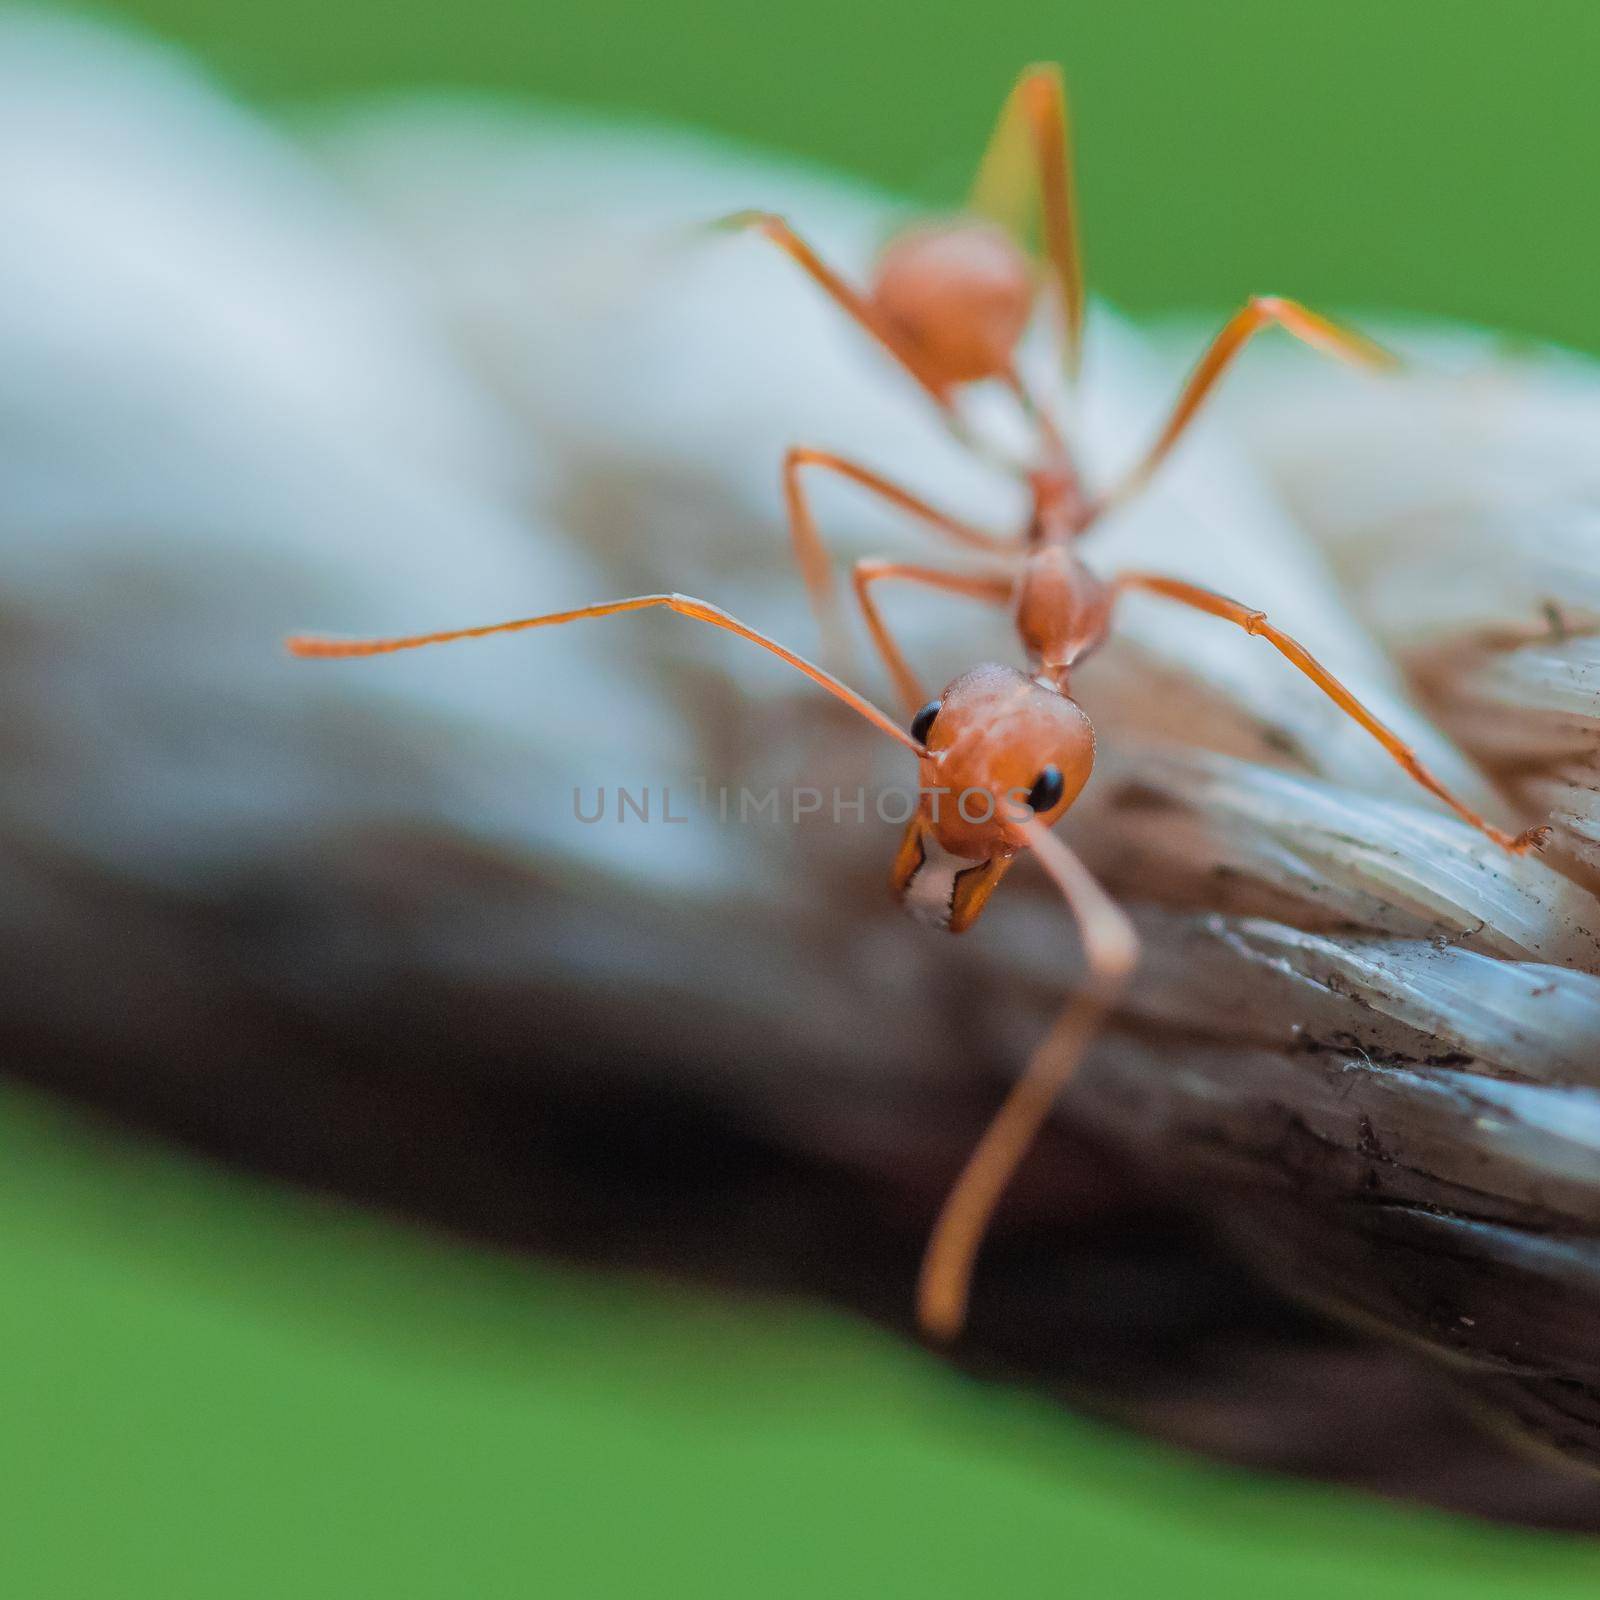 Brown Ants in Macro close up